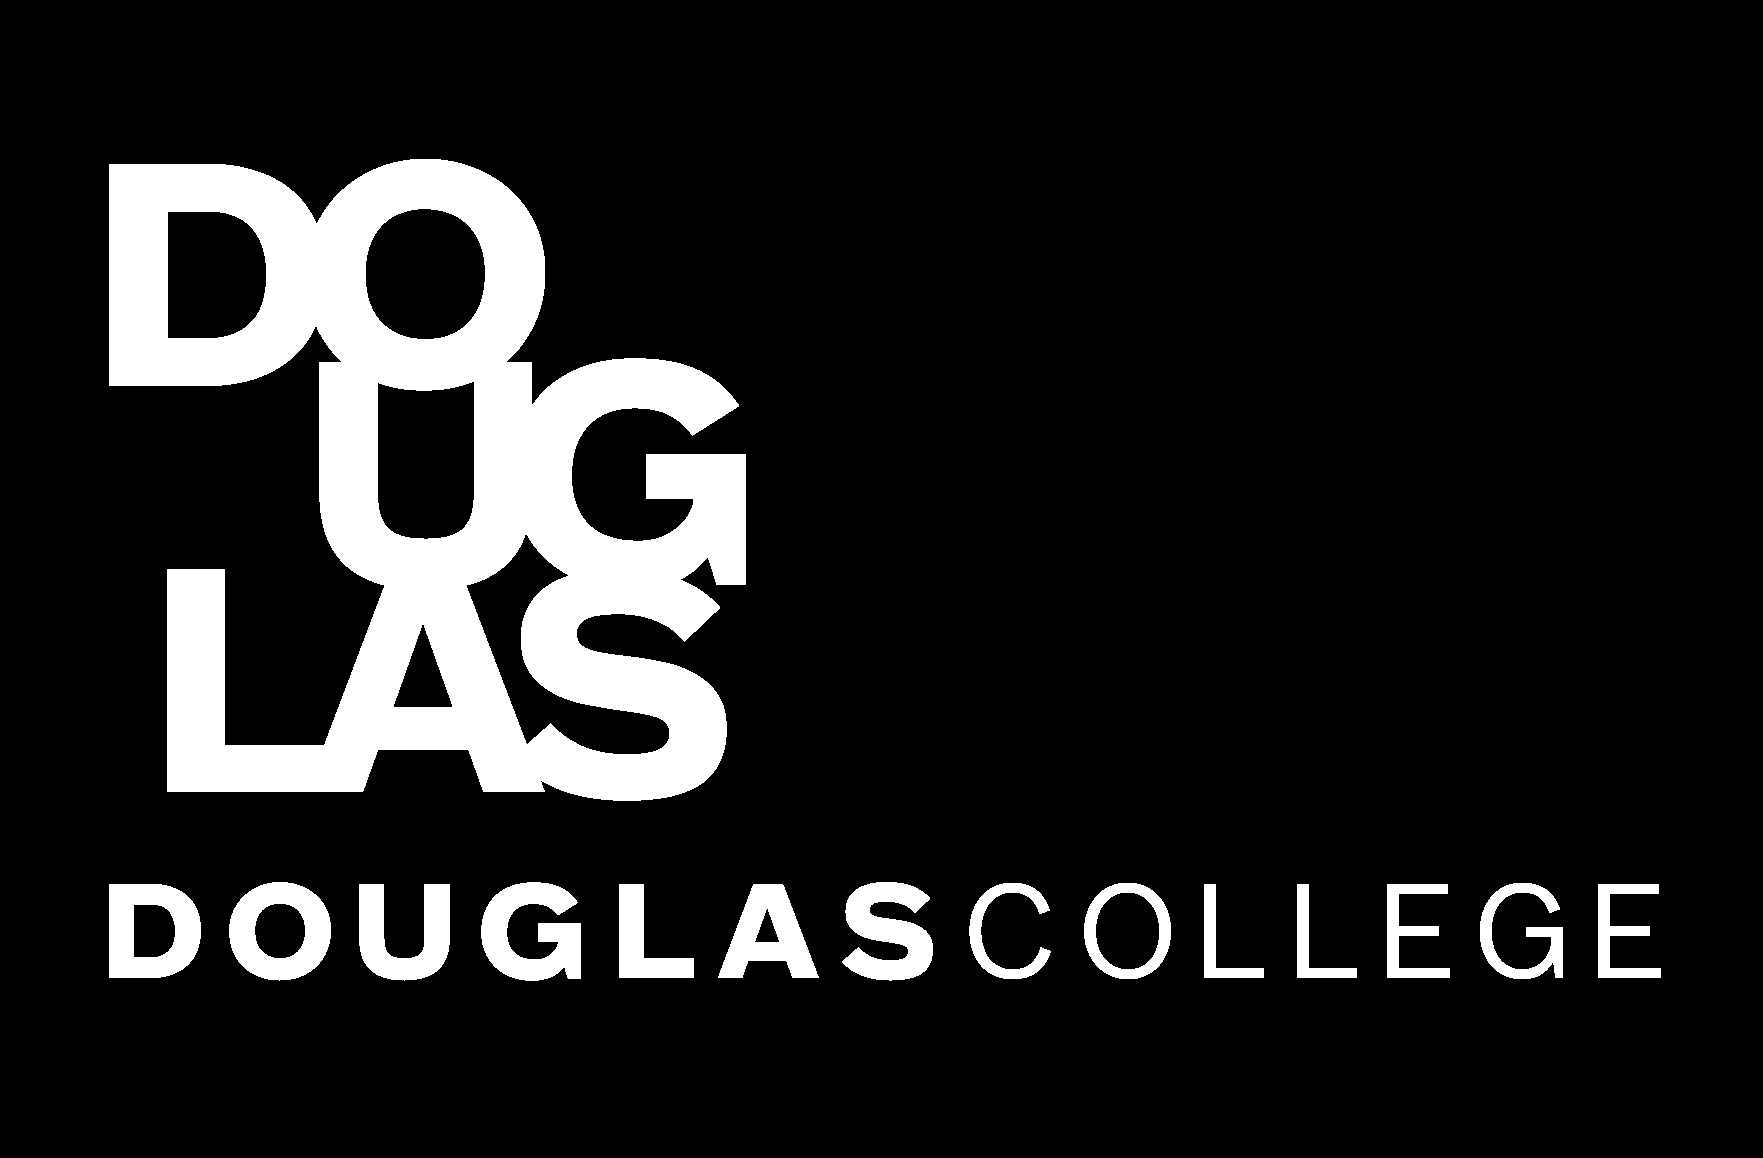 Douglas College, Vancouver, British Columbia